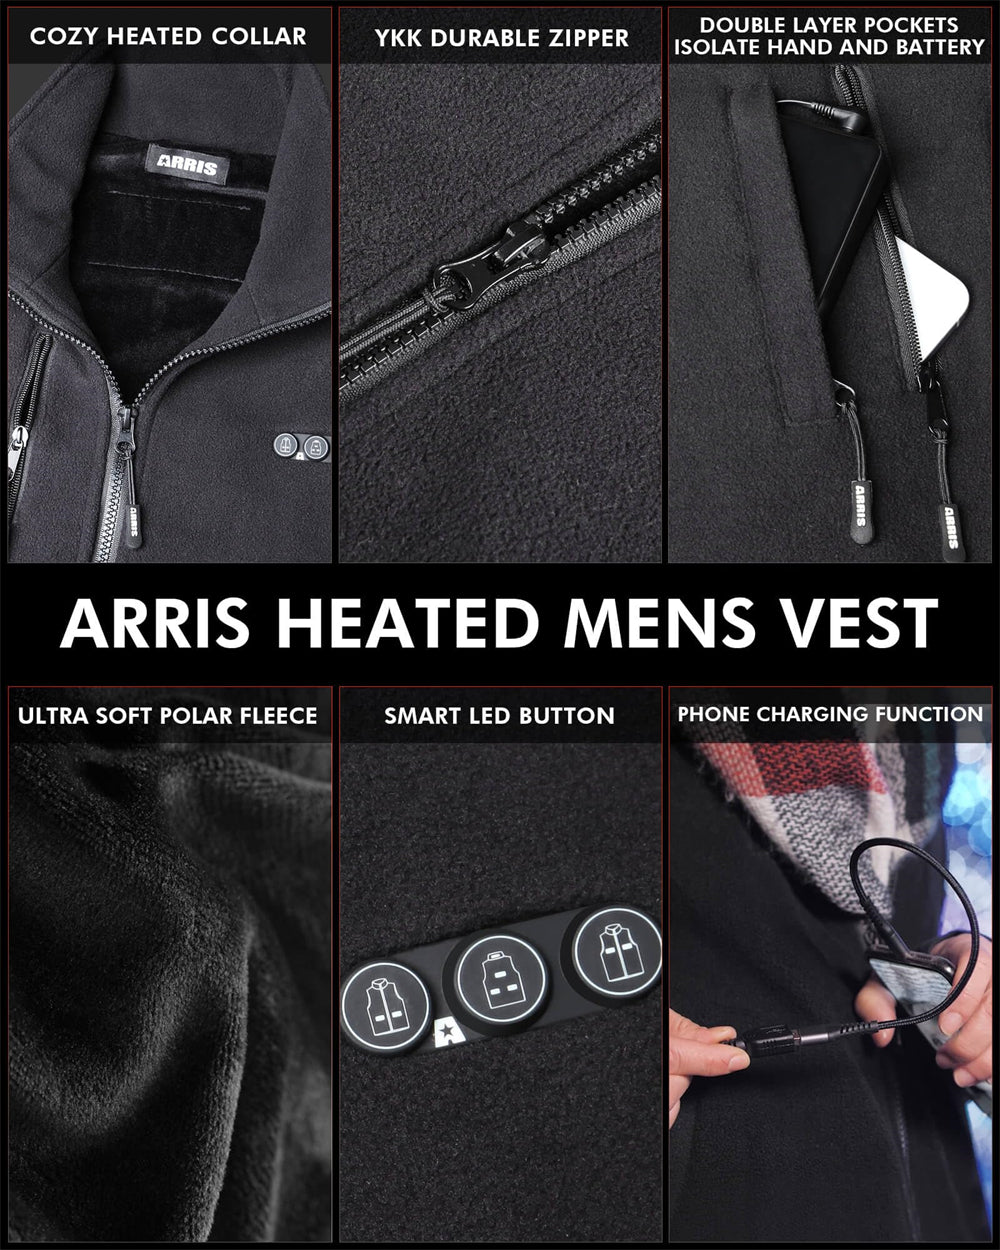 super warm and soft fleece vest on sale now